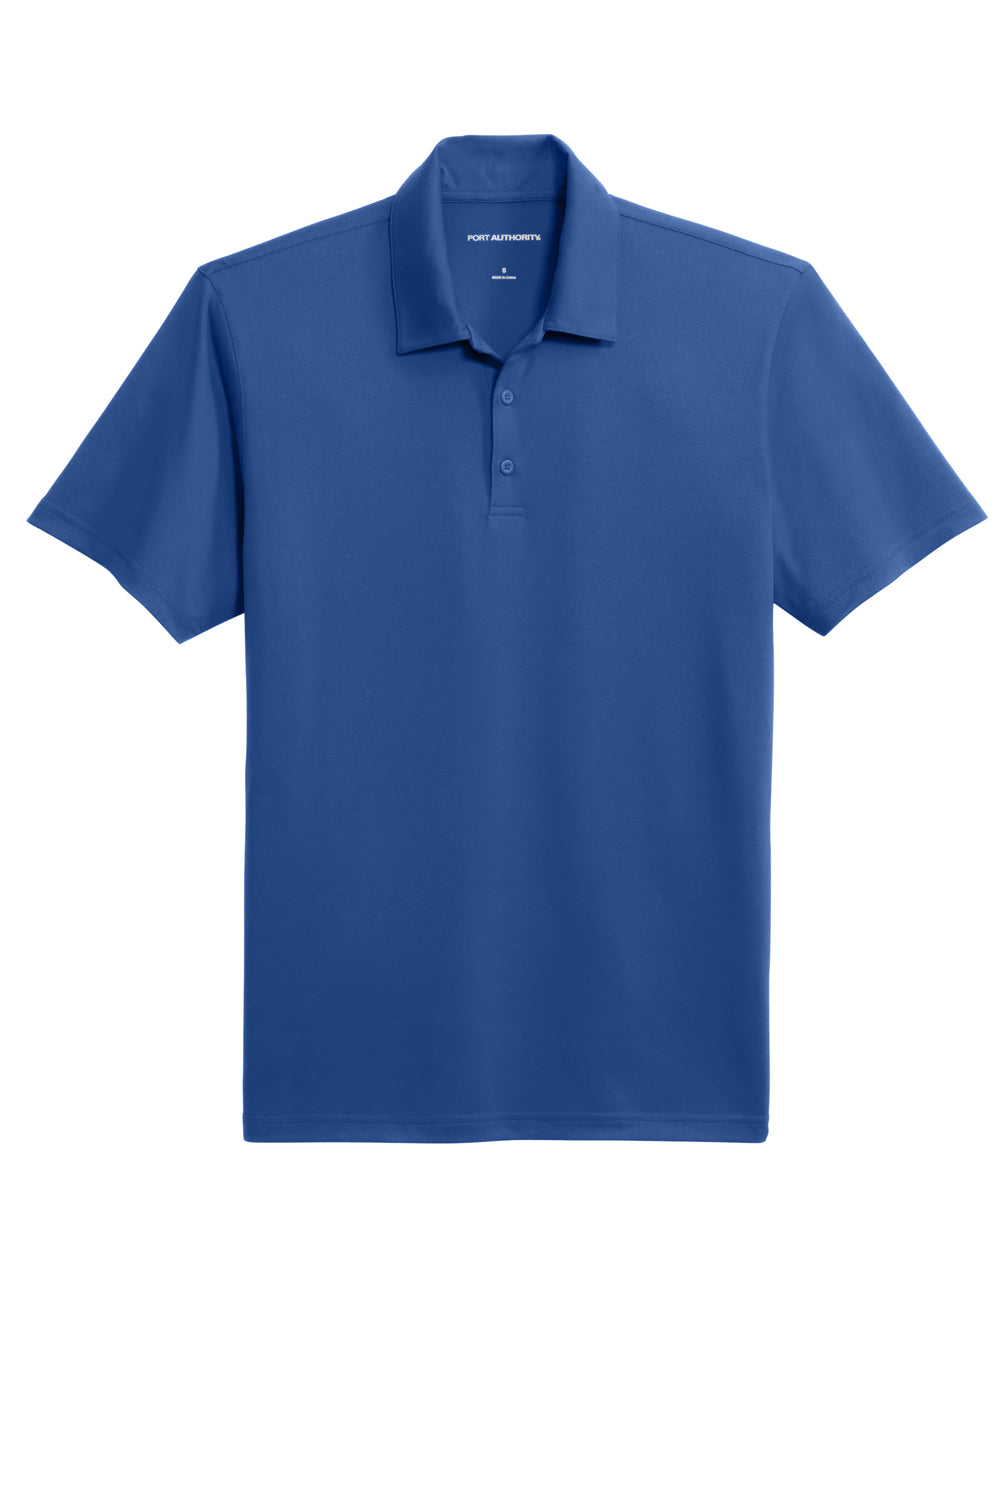 Port Authority K398 Staff Performance Short Sleeve Polo Shirt True Blue Flat Front